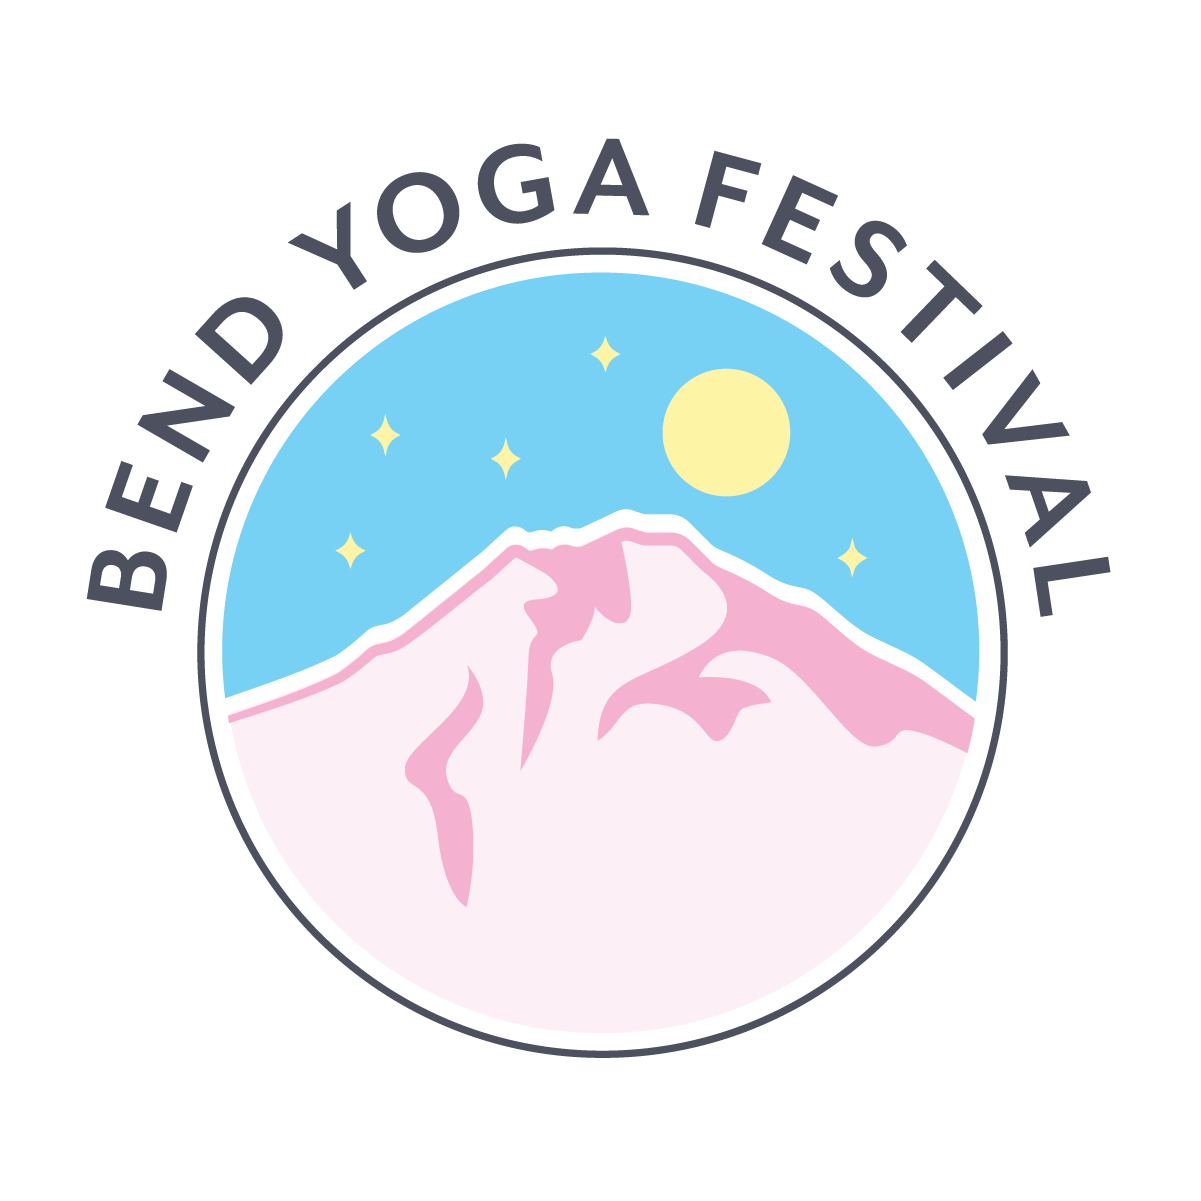 Bend Yoga Festival